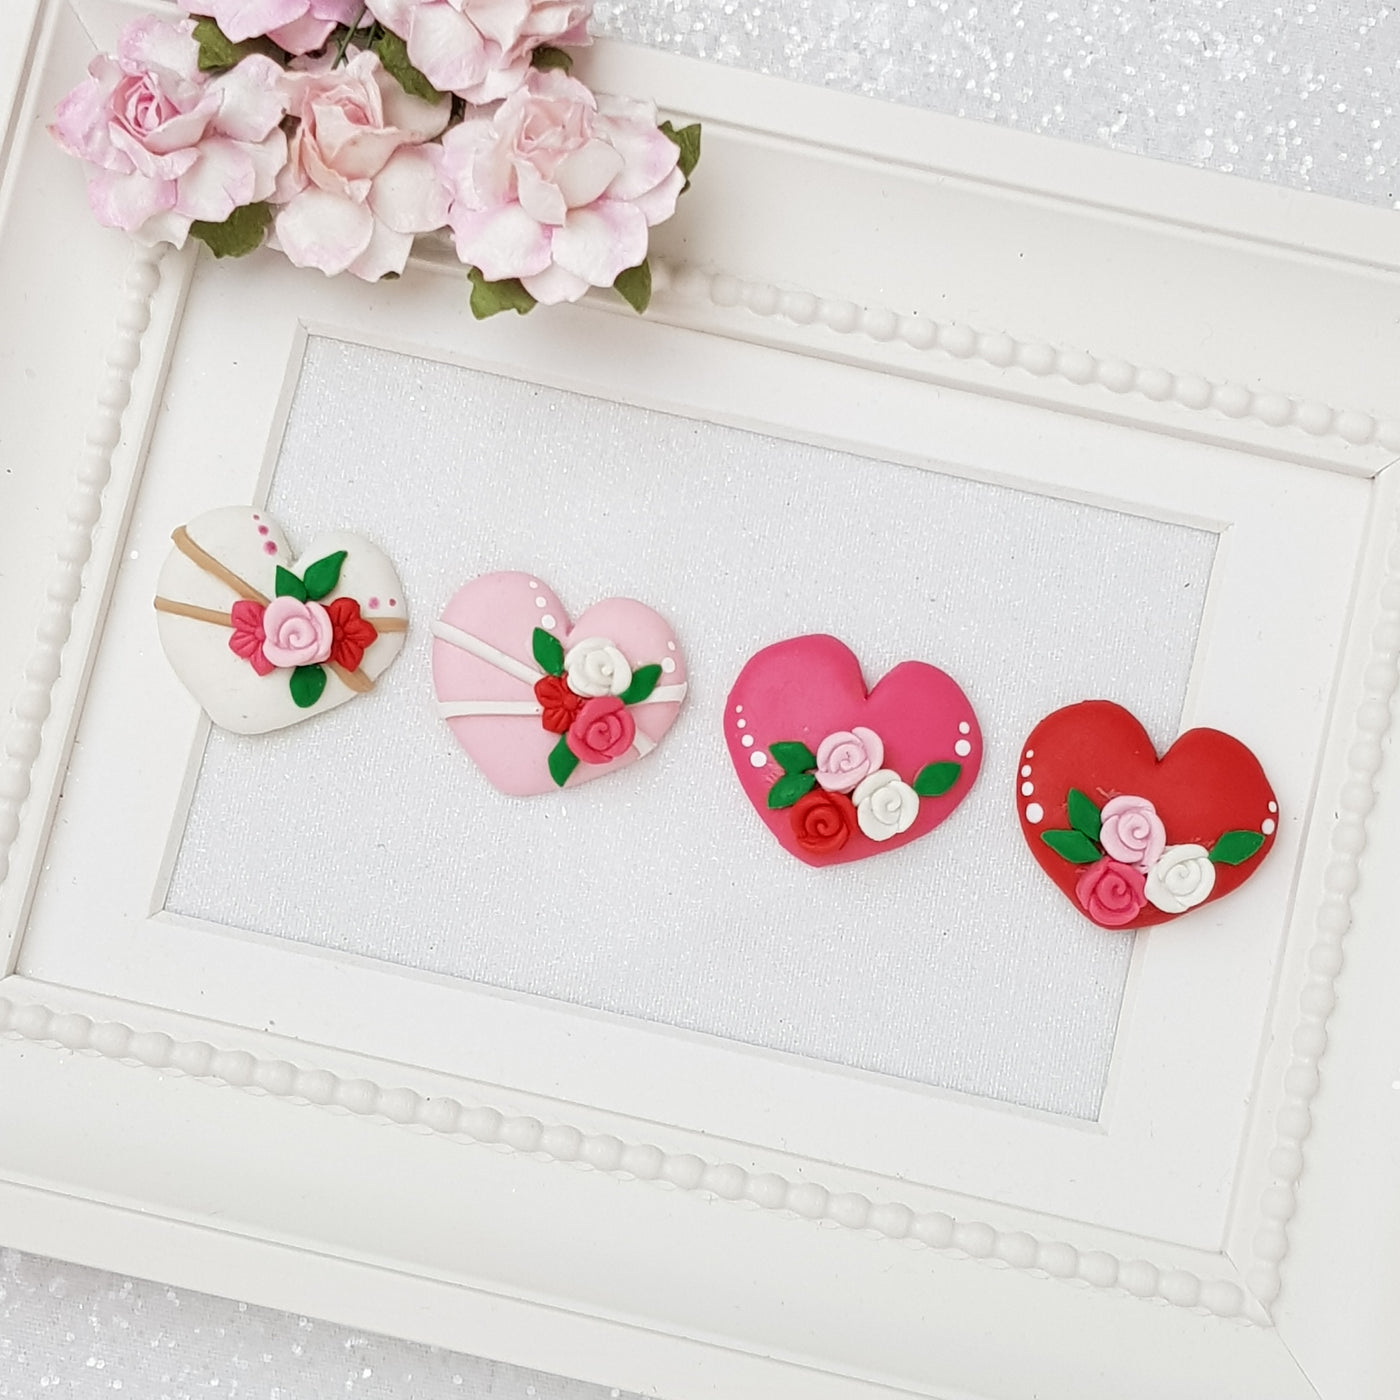 Lovely hearts - Embellishment Clay Bow Centre - Crafty Mood